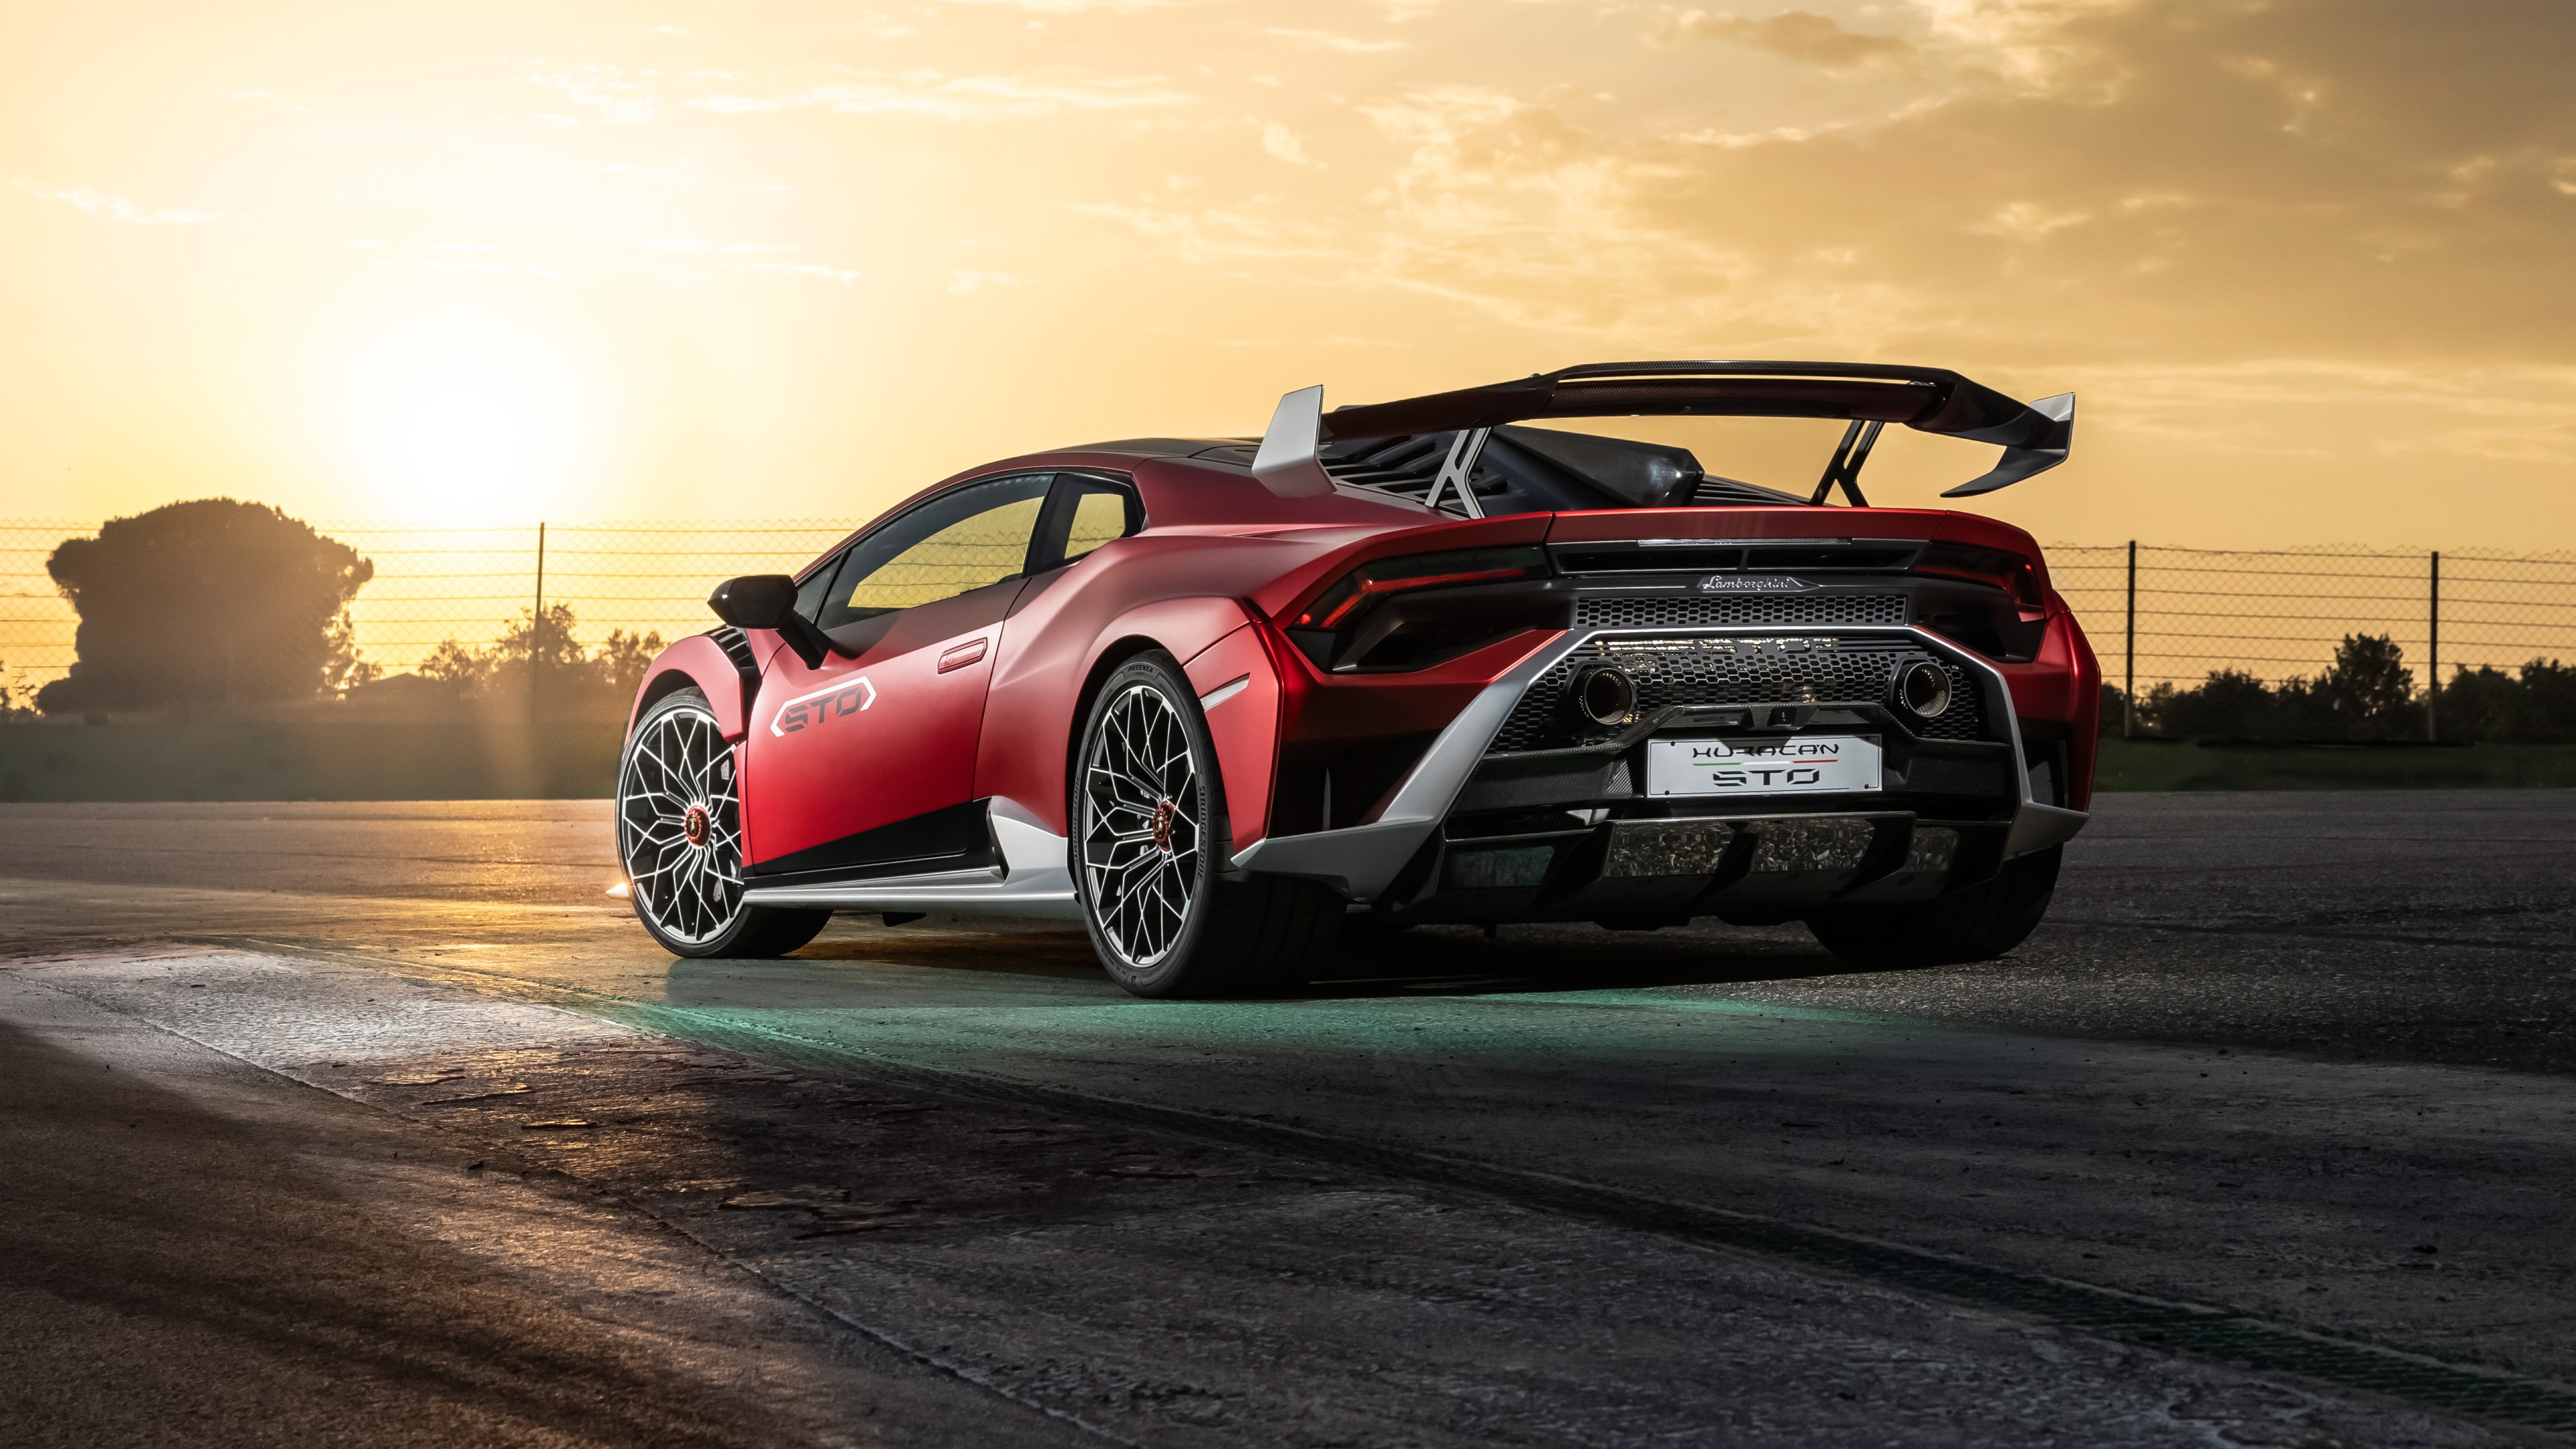 Lamborghini Huracán Sto 2021 5k 10 Wallpaper Hd Car Wallpapers Id